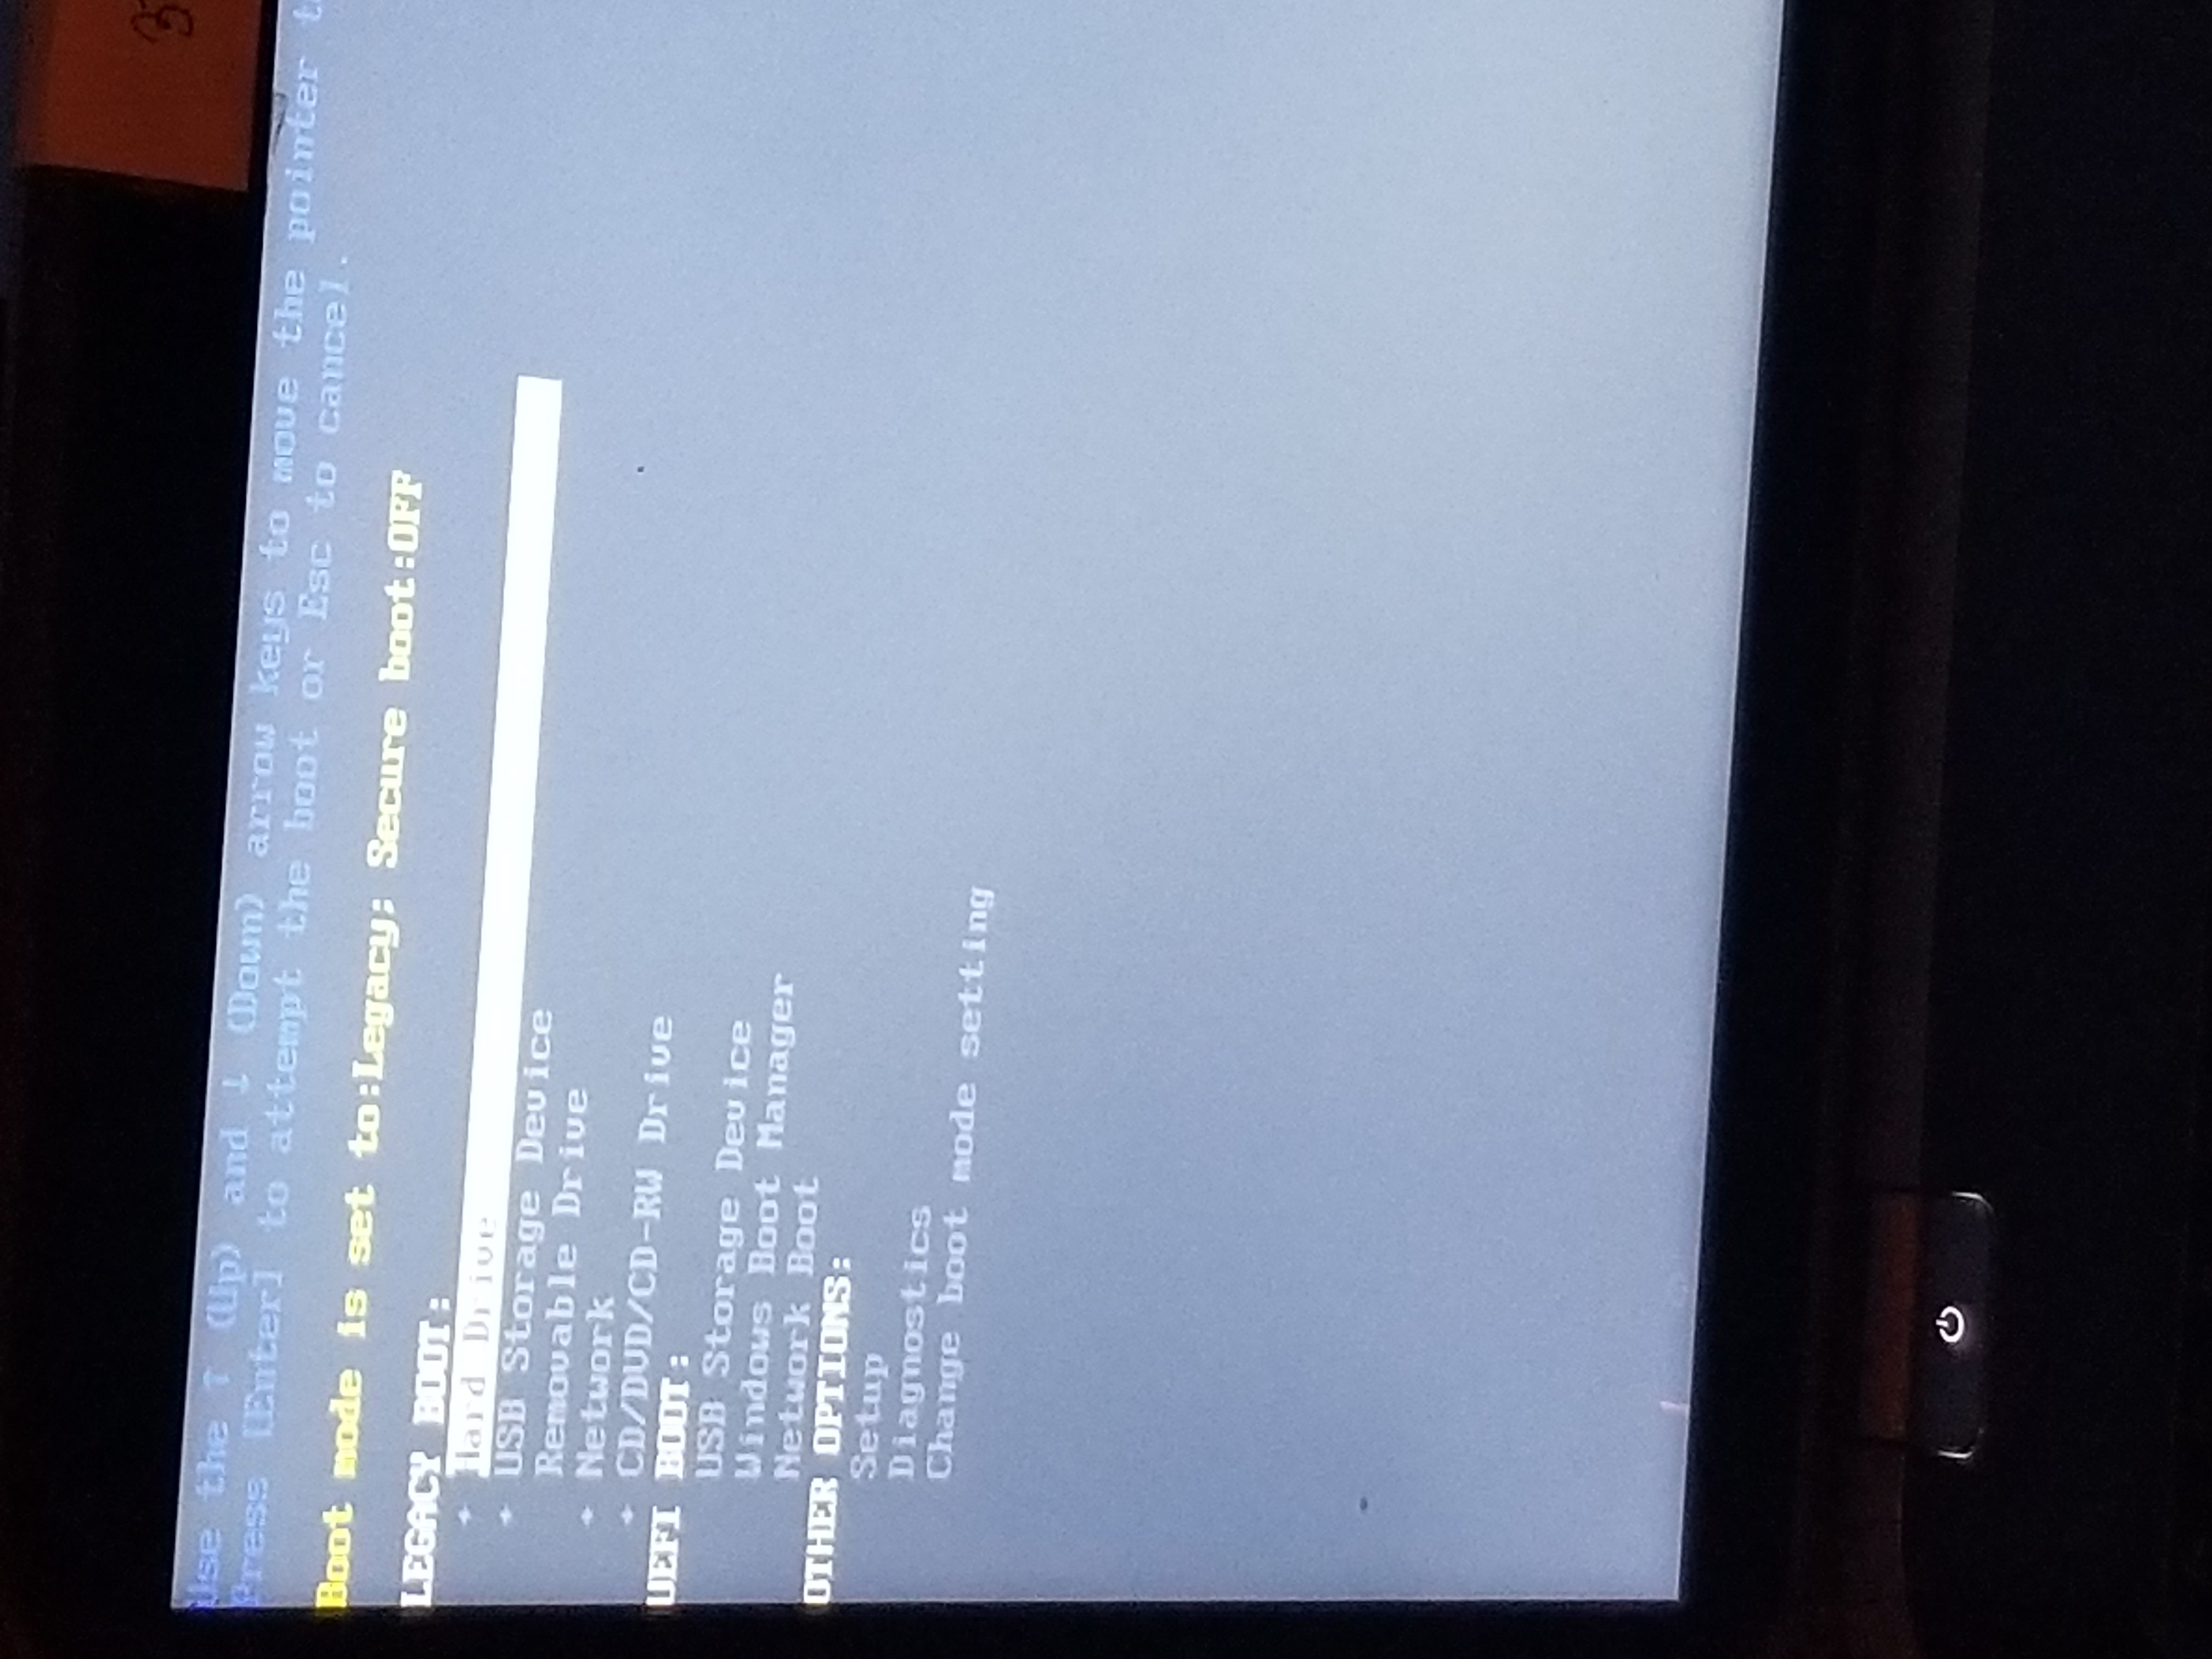 Shutdown during fresh install windows 10 - Microsoft Community